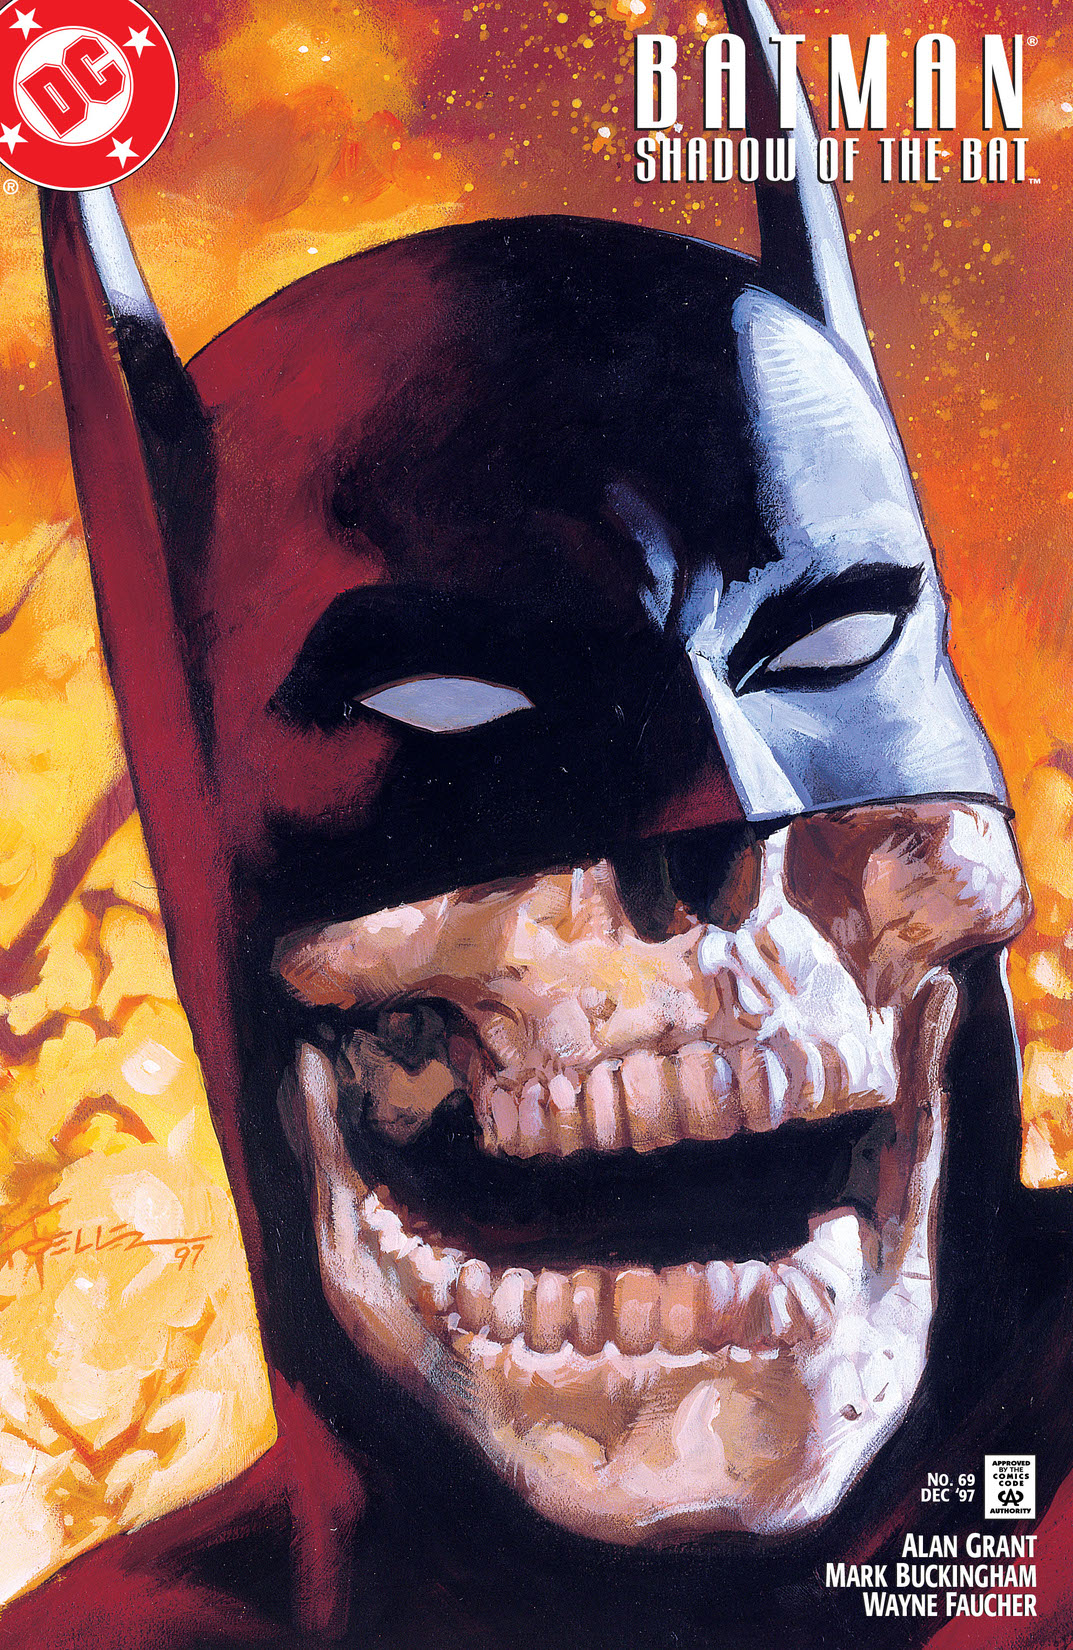 Batman: Shadow of the Bat #69 preview images